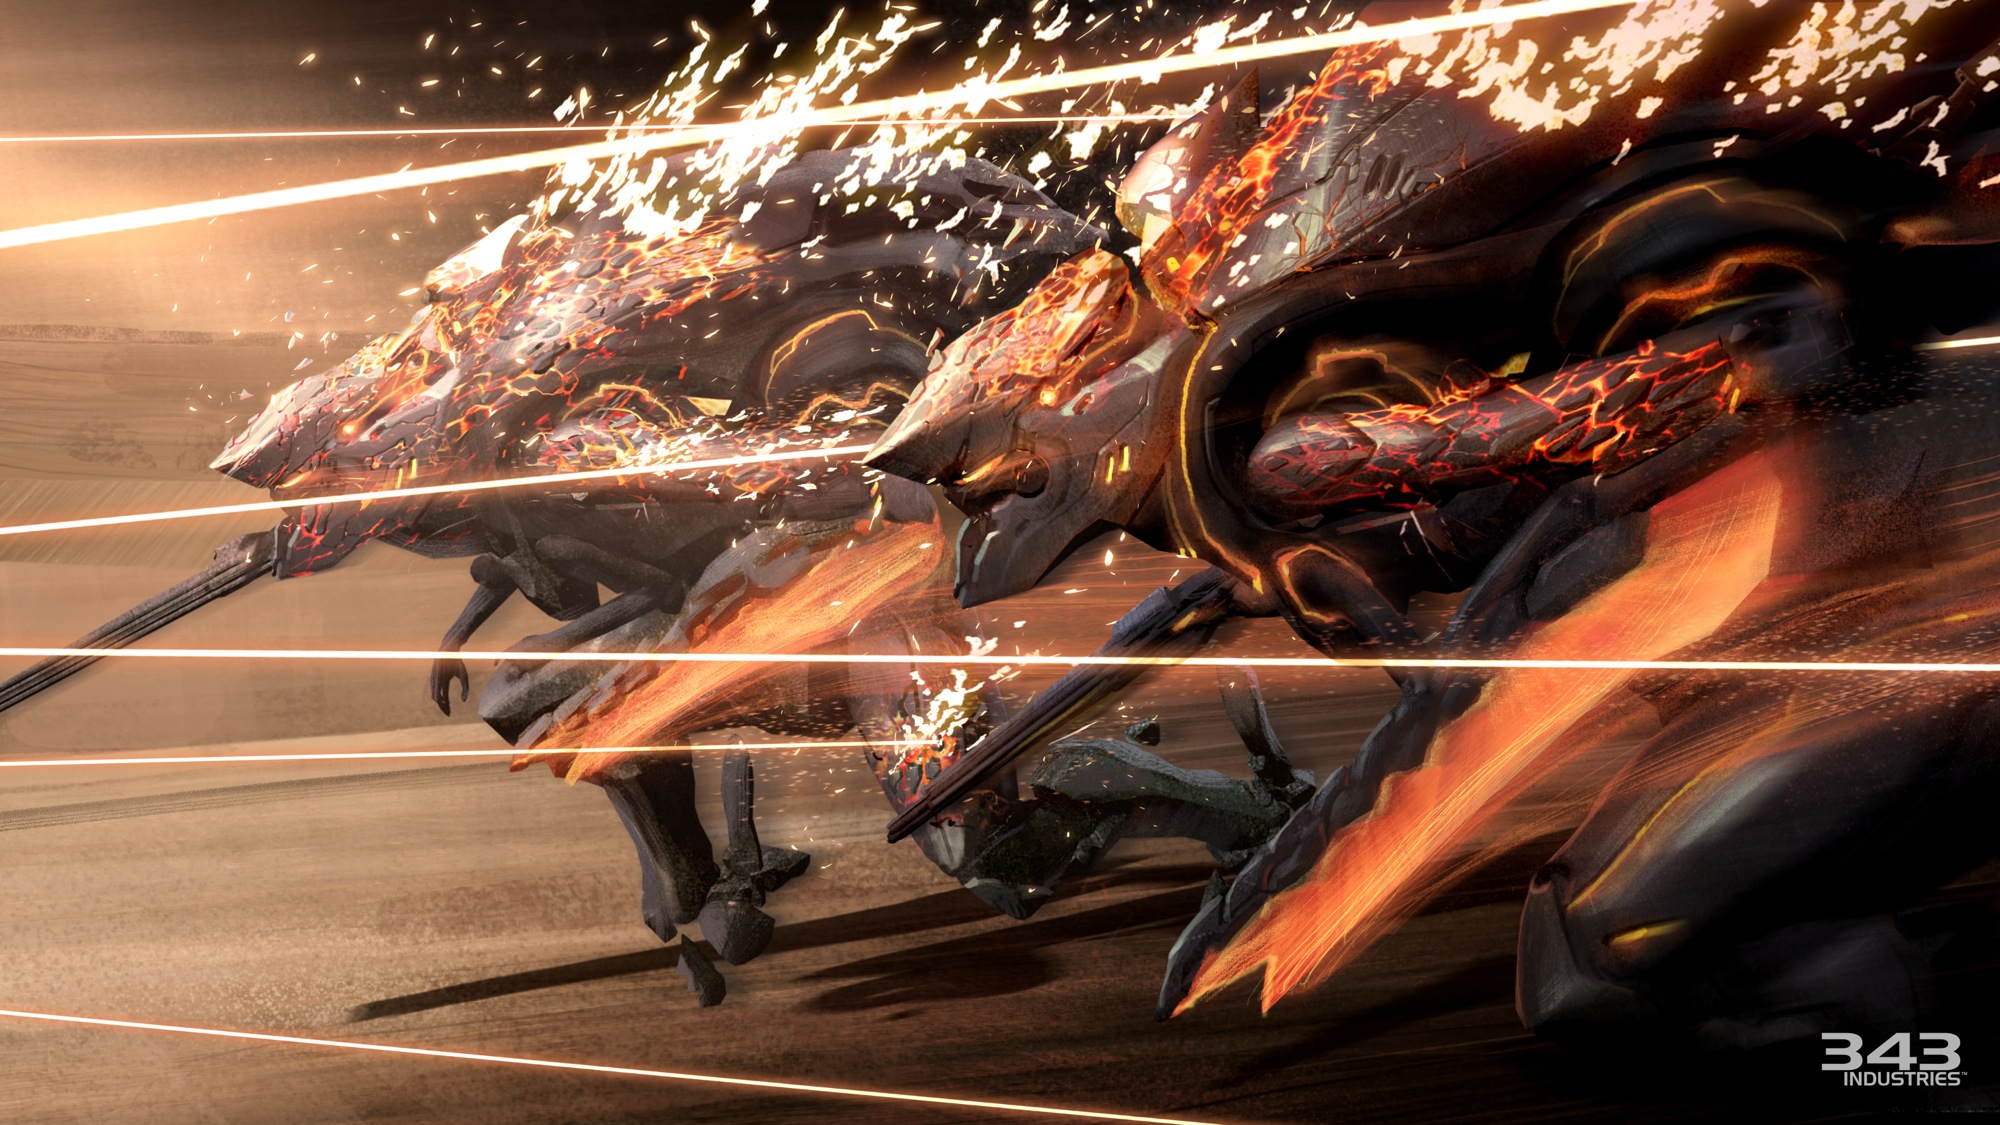 Video Game Halo: Spartan Strike HD Wallpaper | Background Image